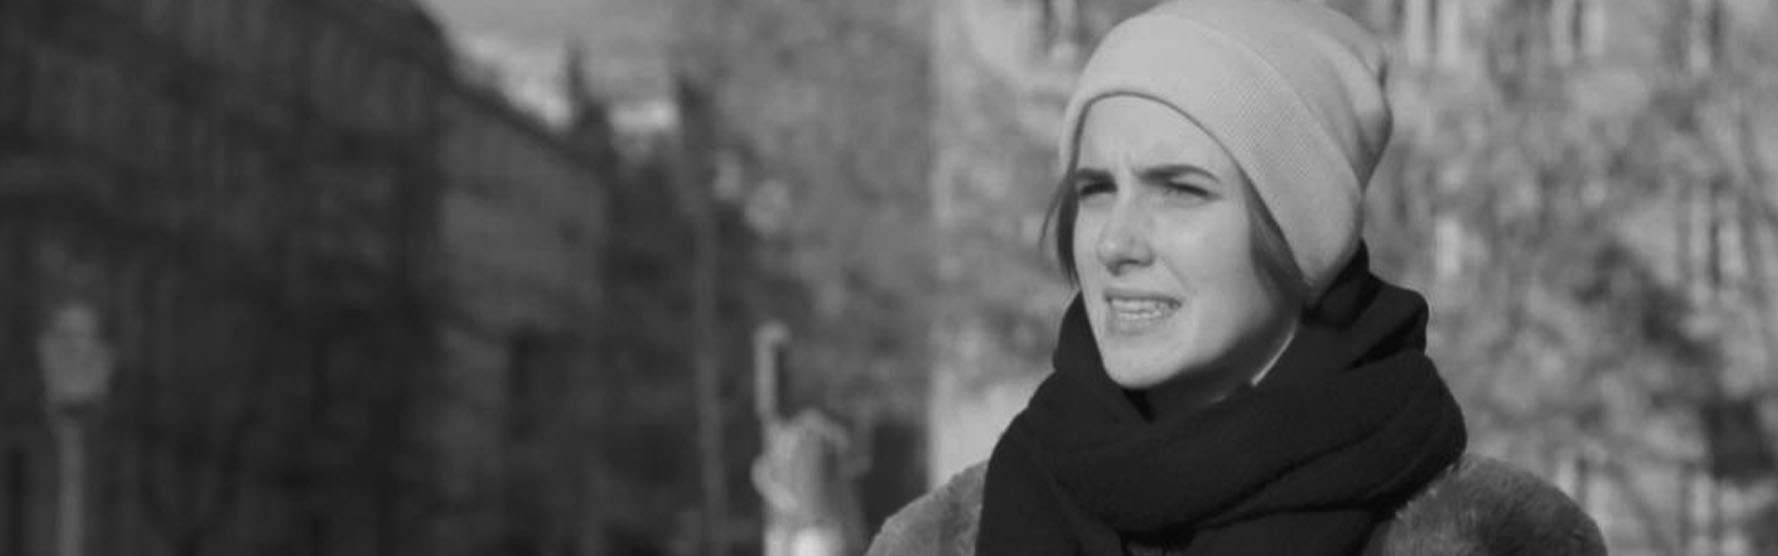 Editor's Choice: Webvideo: Germany: Women rabbis making history